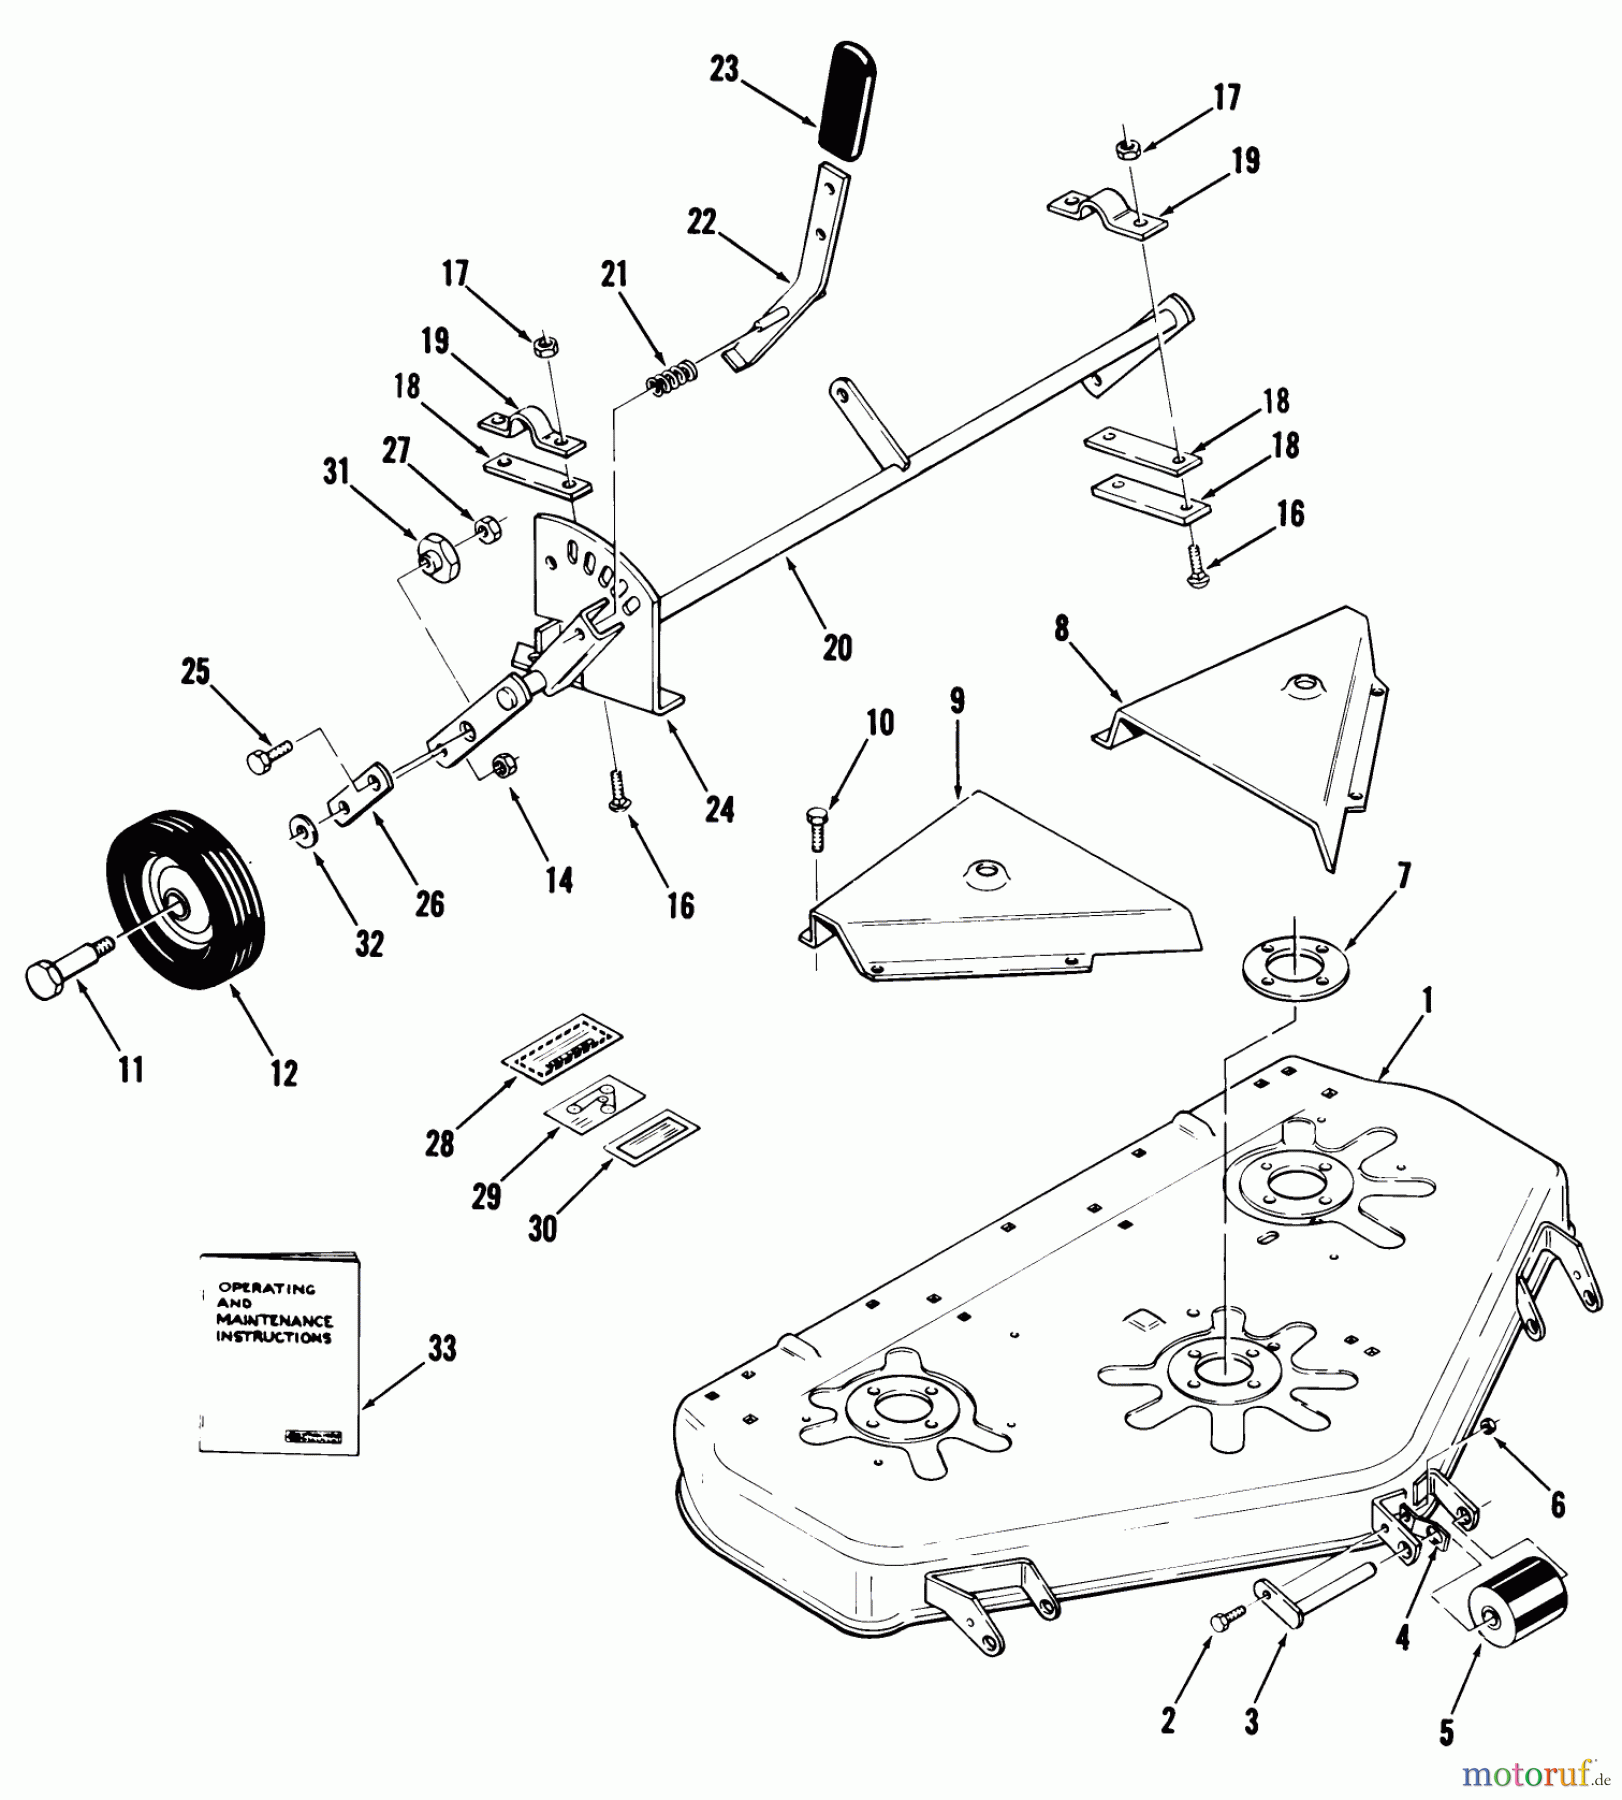  Toro Neu Mowers, Deck Assembly Only 05-48MS01 - Toro 48